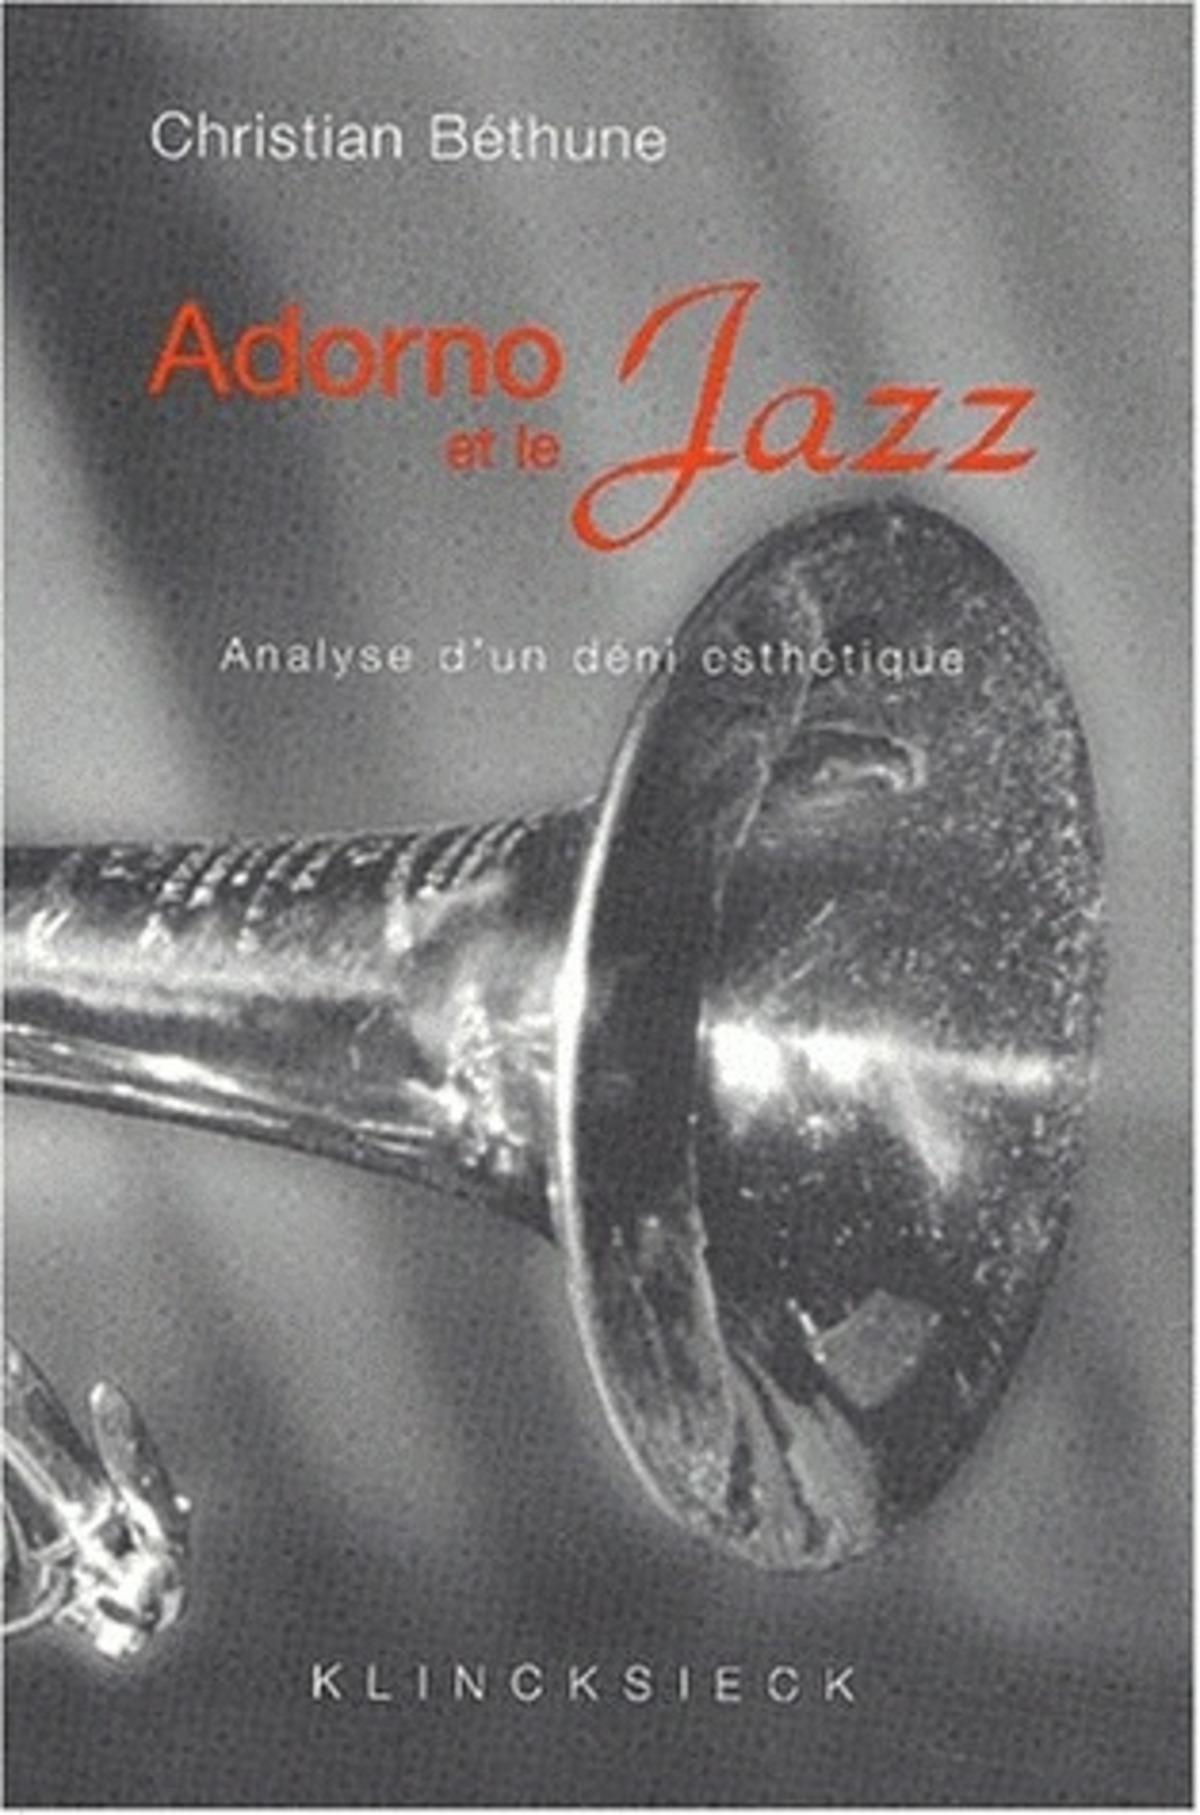 Adorno et le jazz